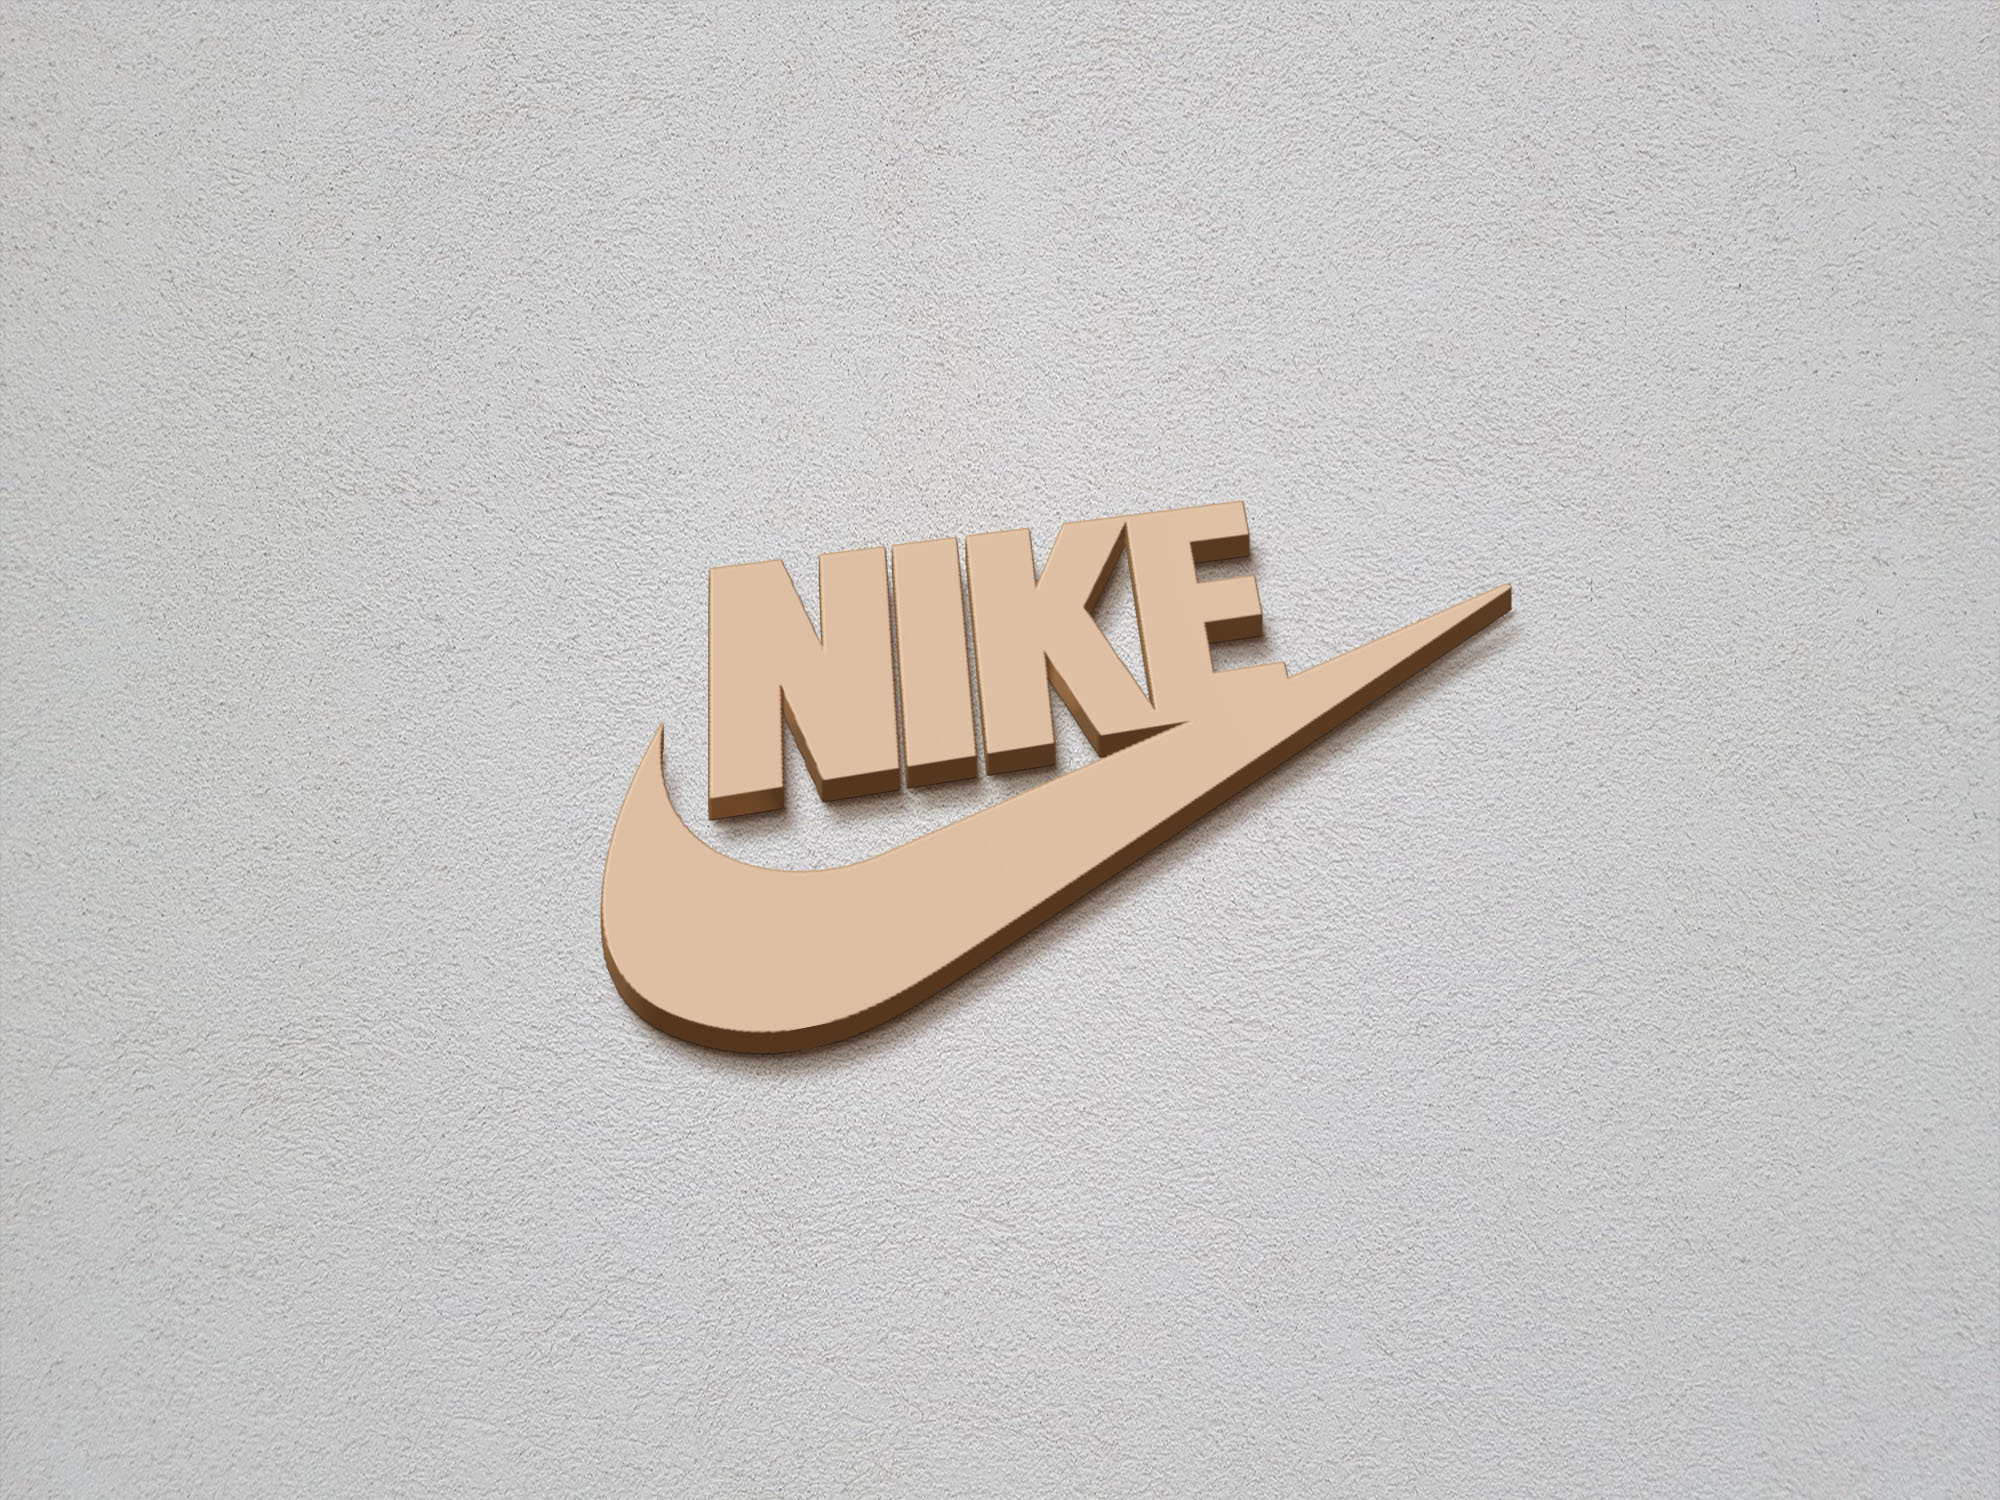 Nike logo on 3d gold mockup